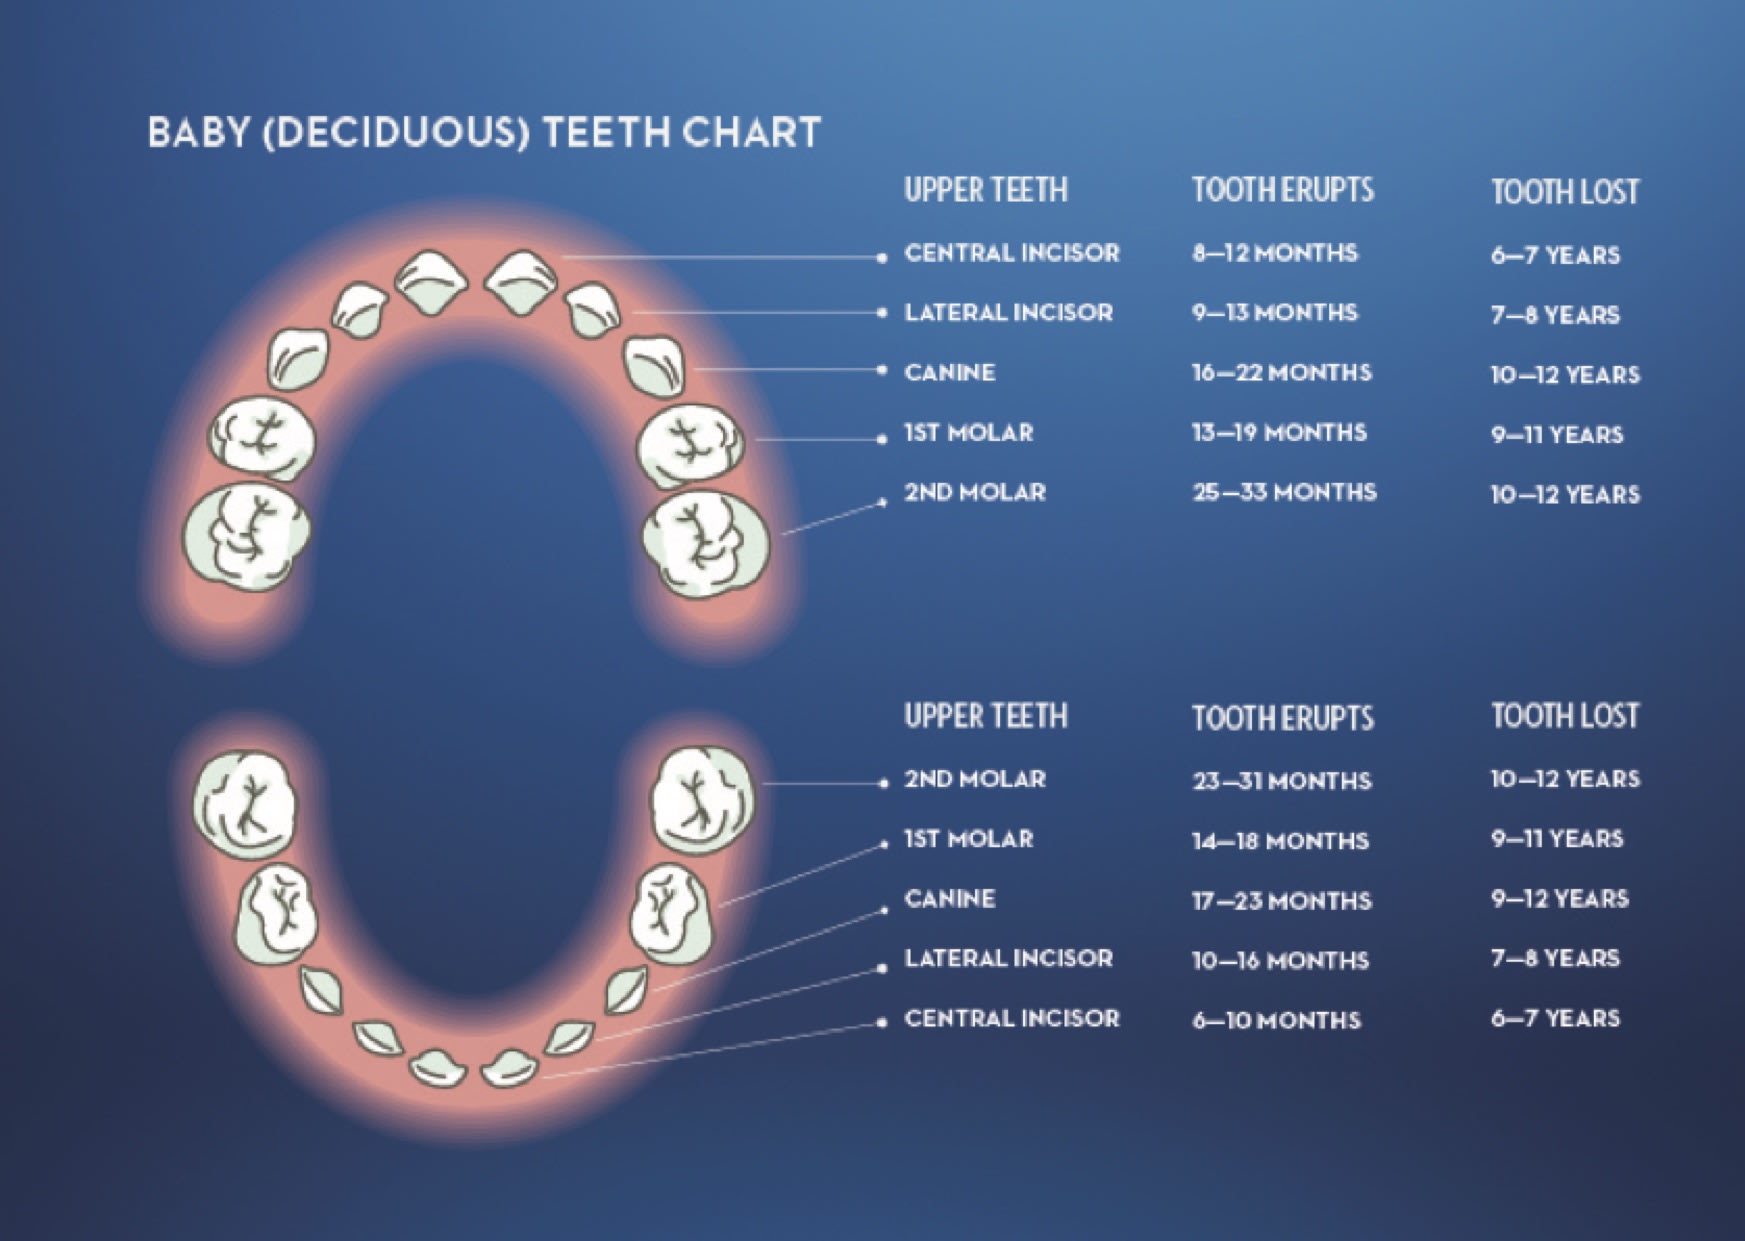 'Baby (Deciduous) Teeth Chart